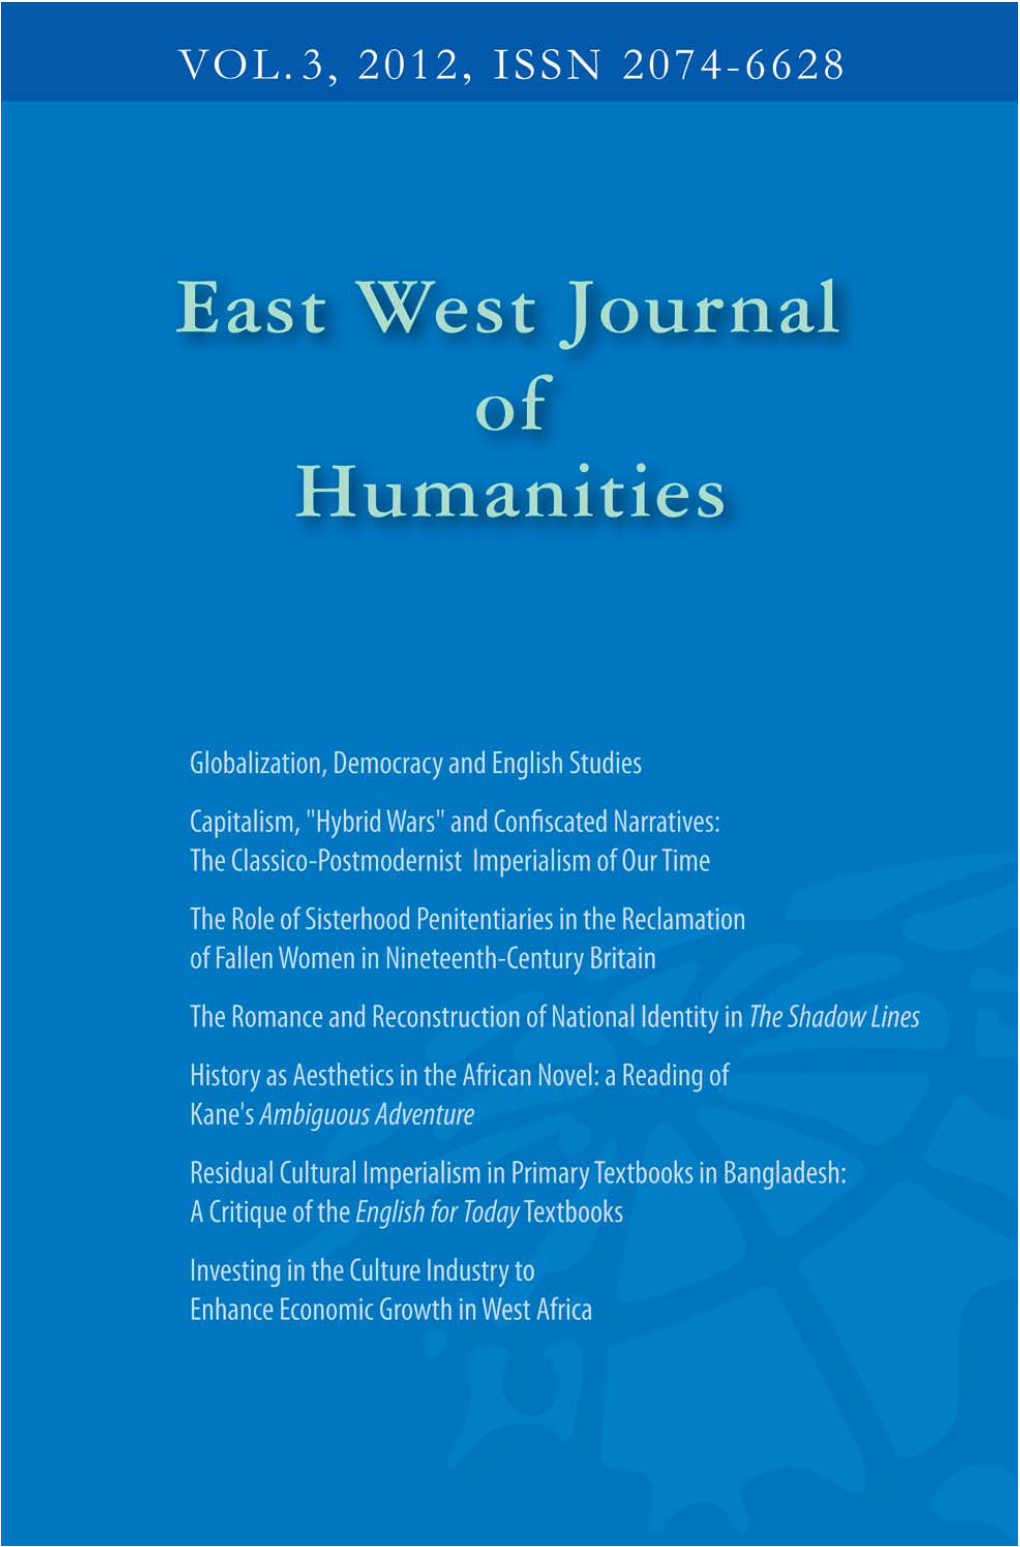 East West Journal of Humanities-VOL